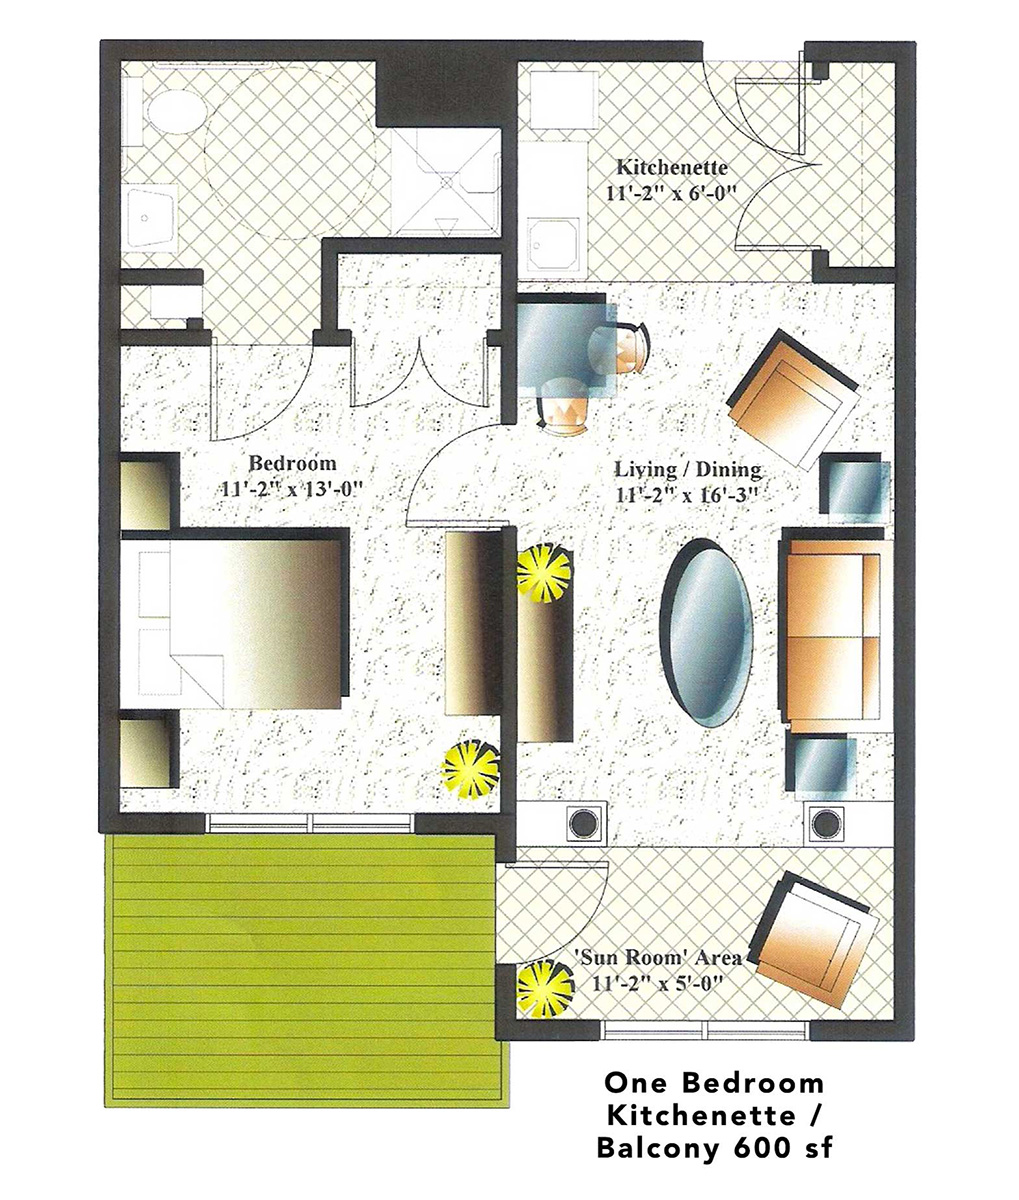 One Bedroom / Kitchenette / Balcony 600 sf